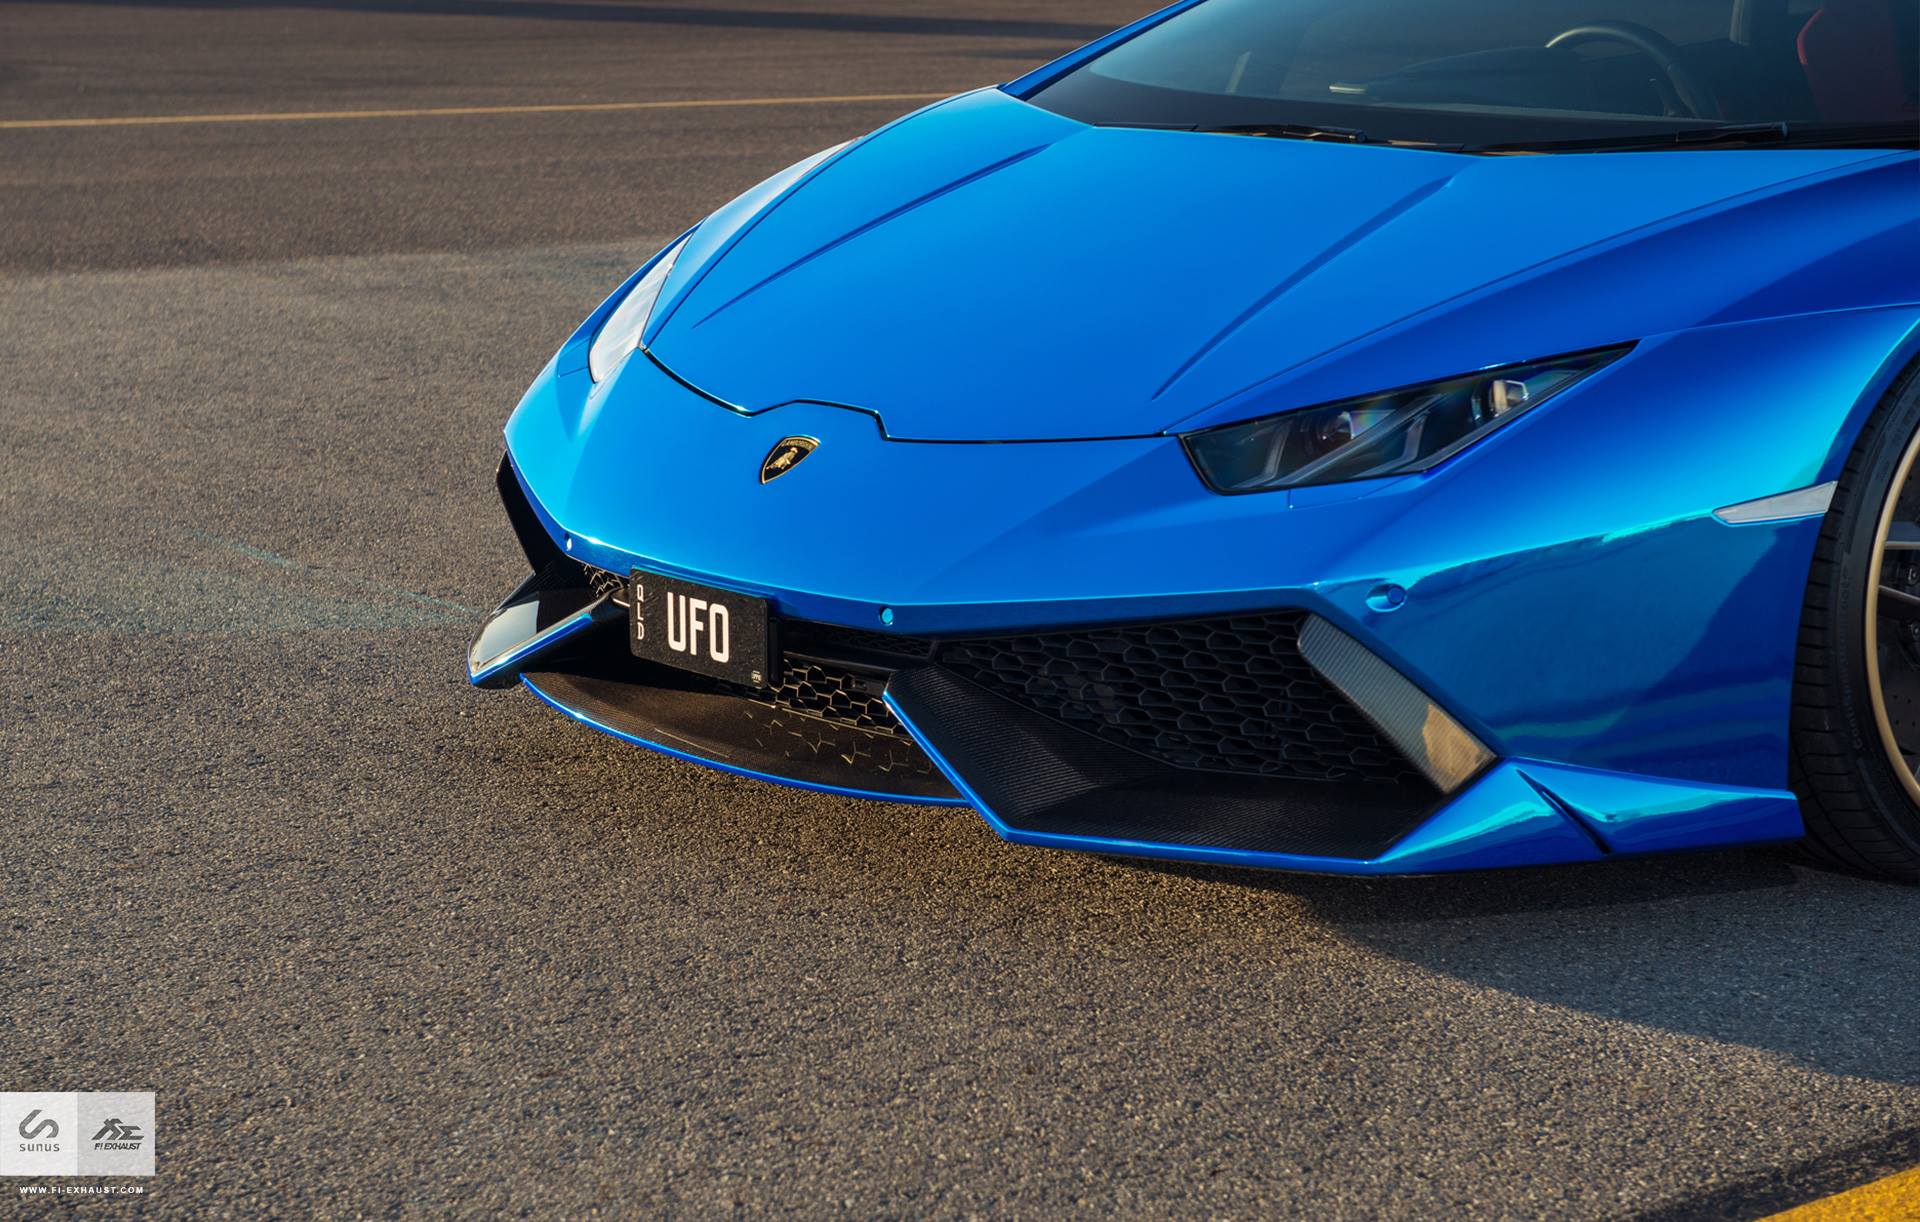 Потрясающий синий хромированный Lamborghini Huracan от Sinus Motorsport